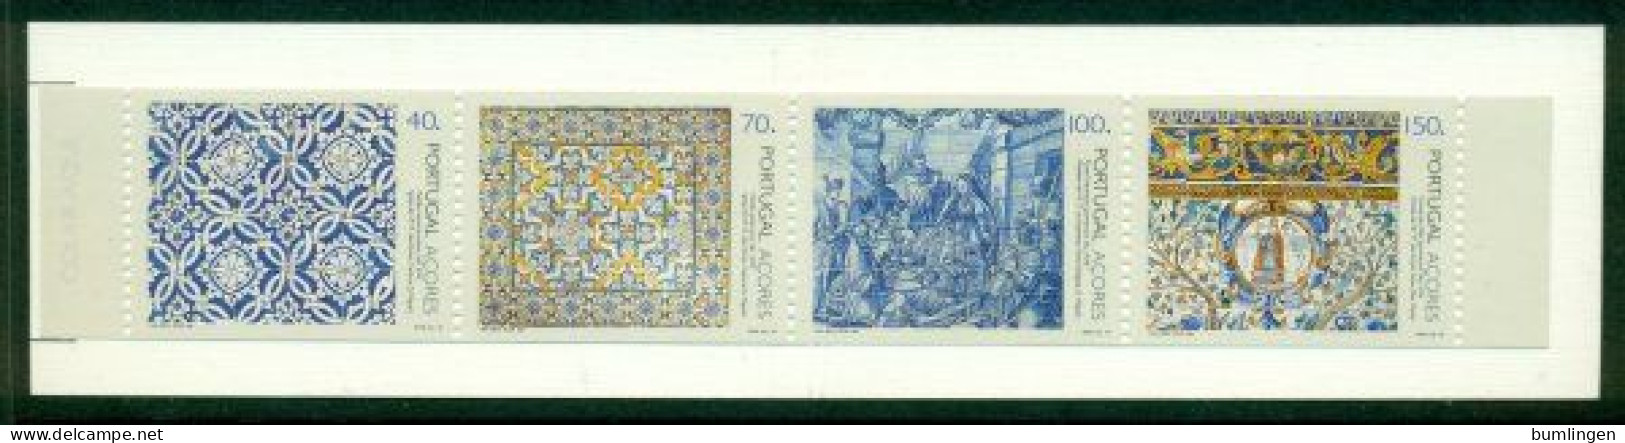 PORTUGAL – AZORES 1994 Mi MH 12 Booklet** Antique Tiles [B406] - Porzellan